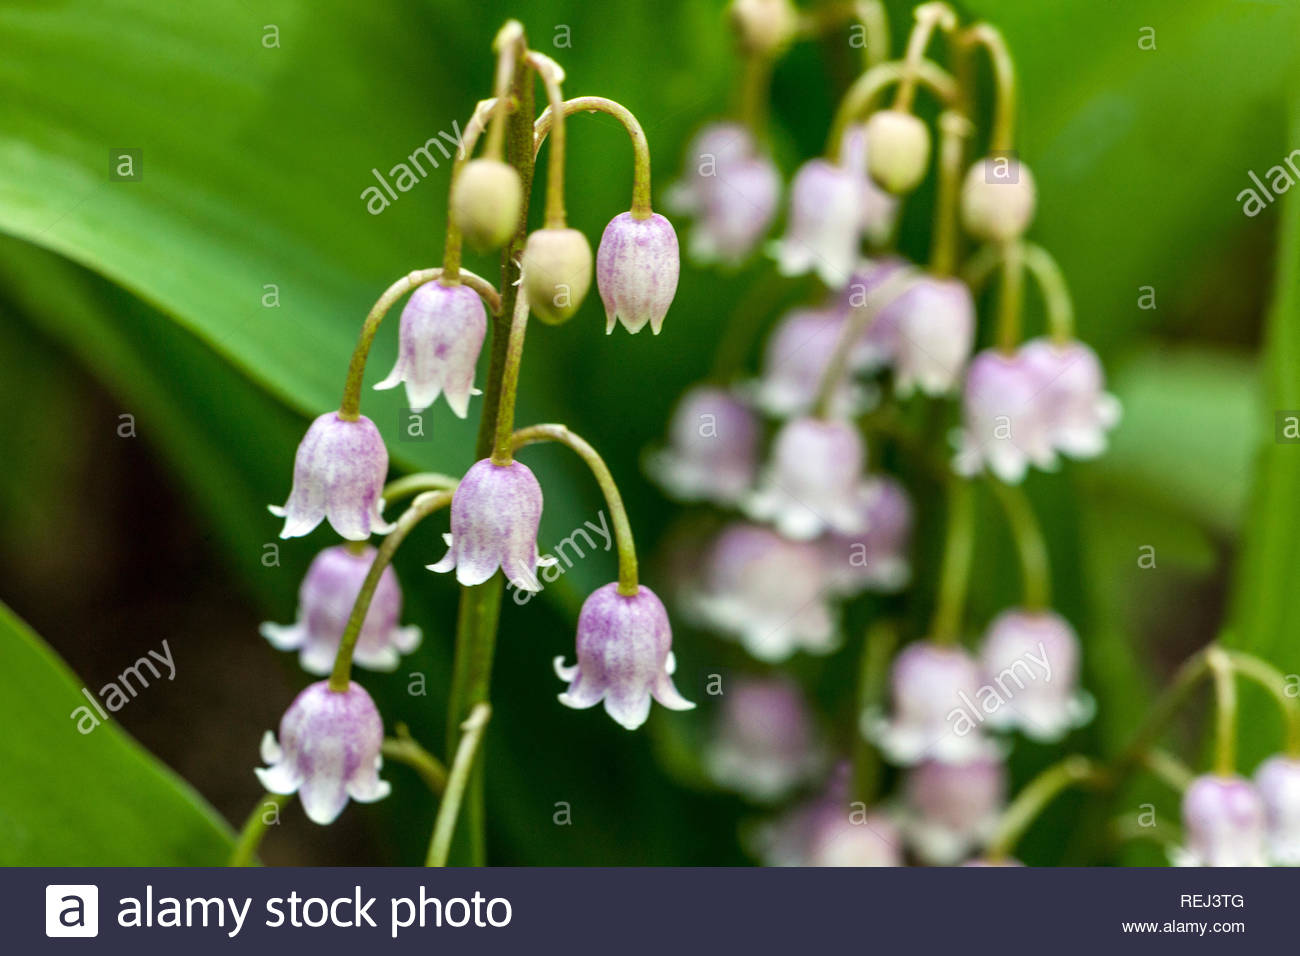 lily of the valley convallaria majalis rosea REJ3TG